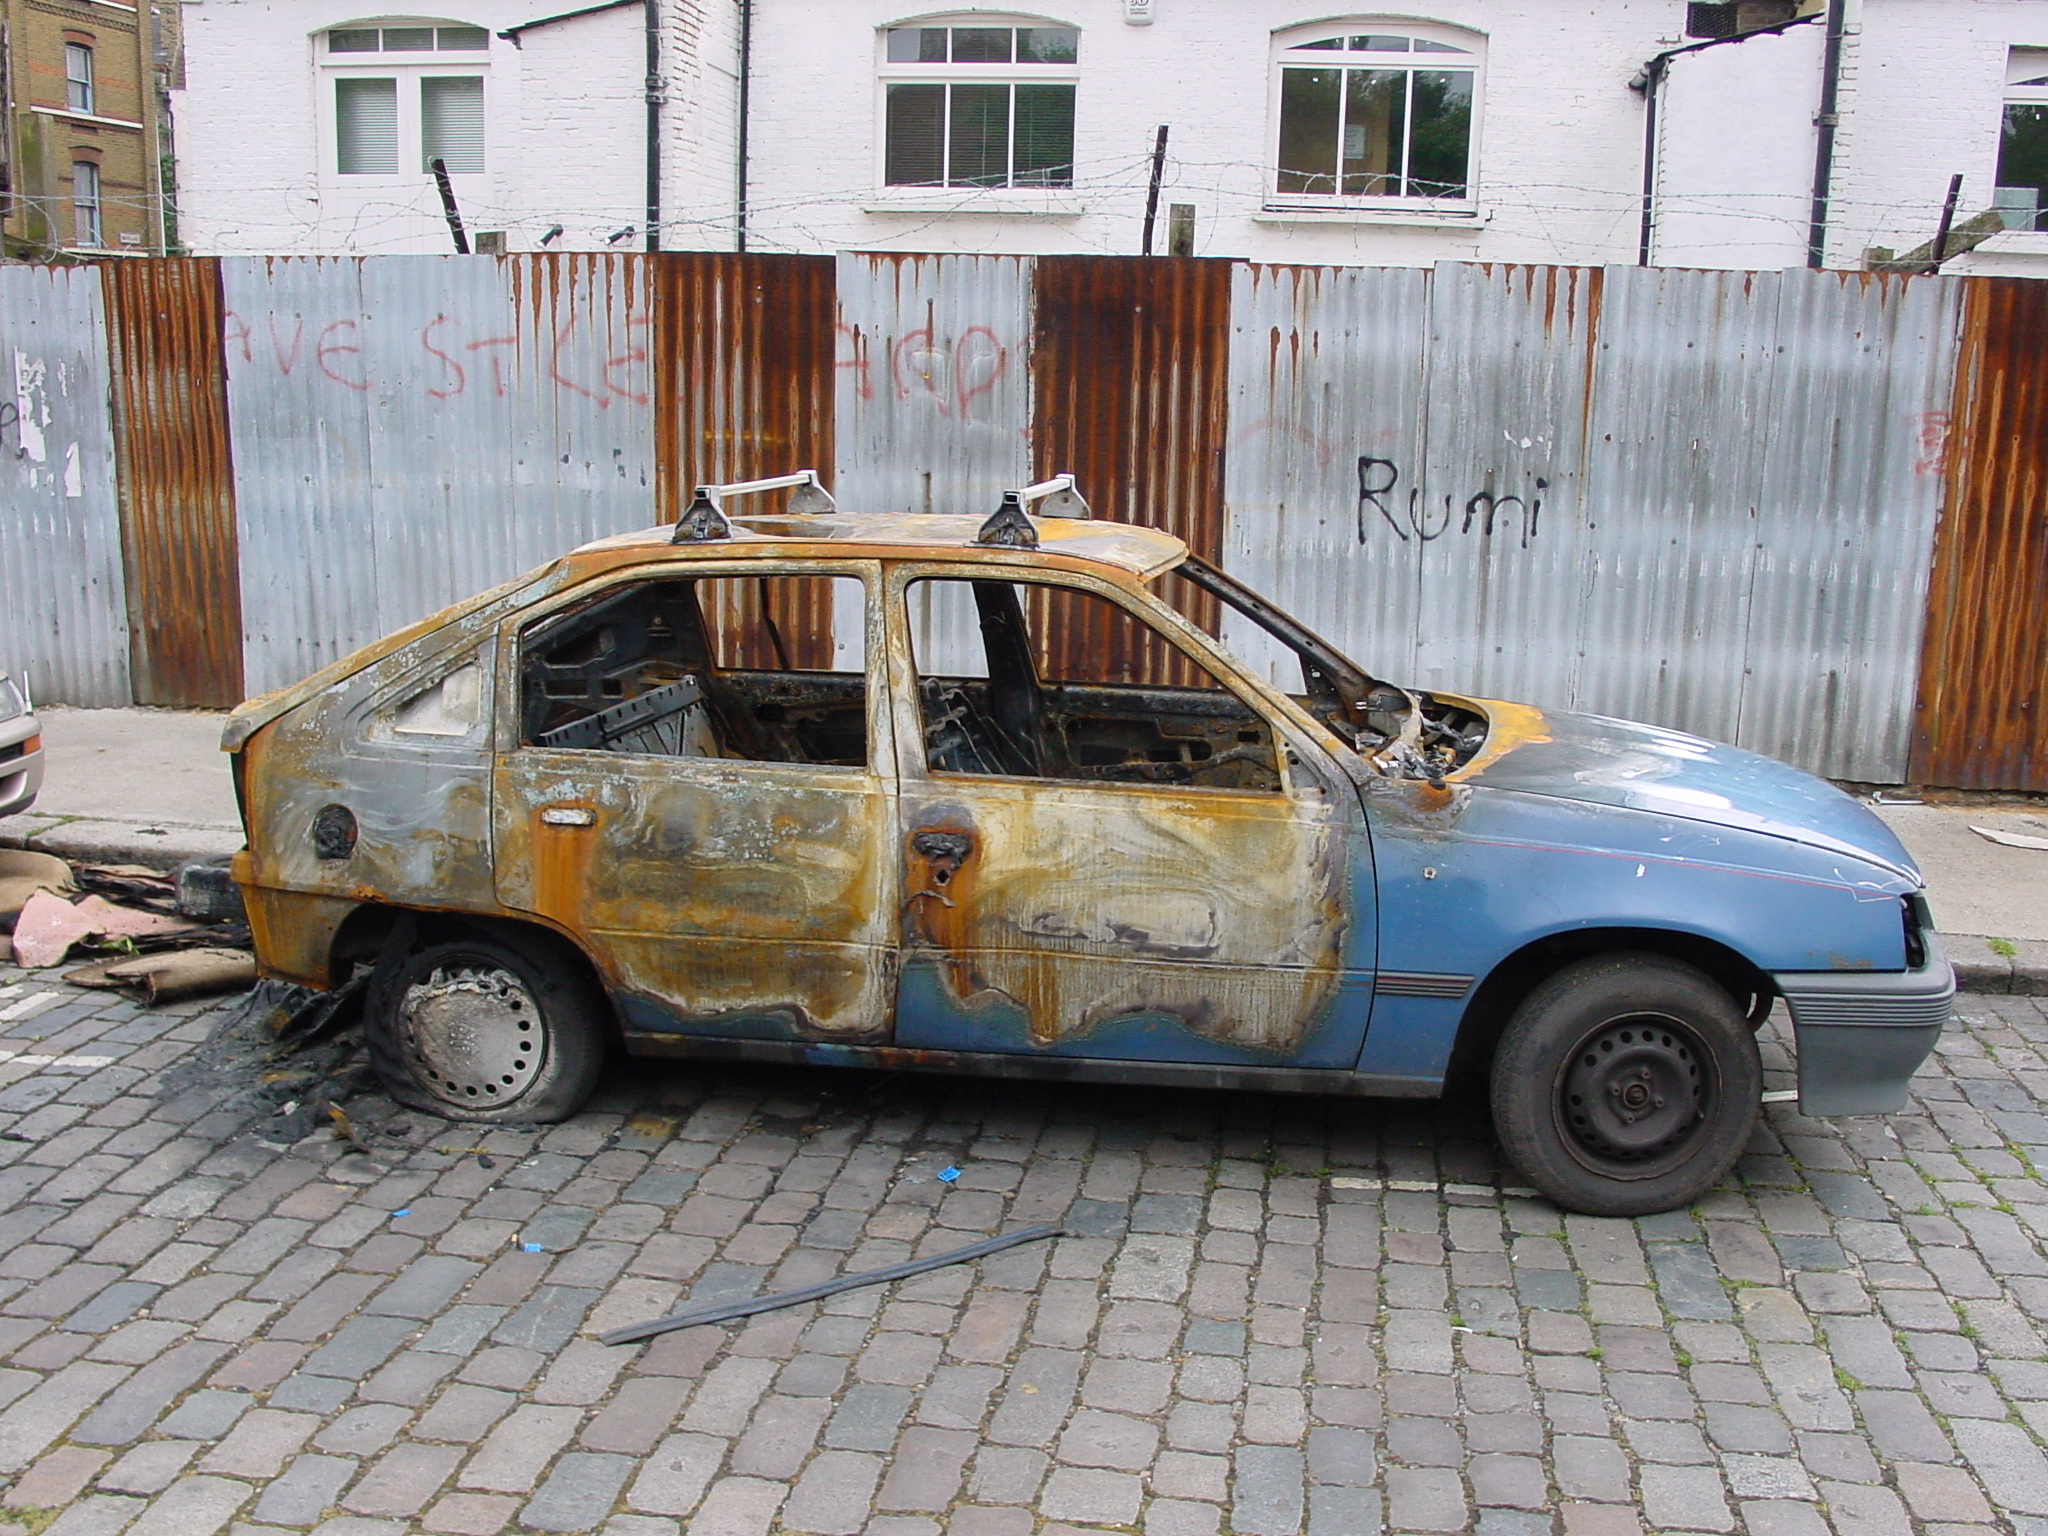 Burnt out car, Rhoda Street, 17 Jun 2001